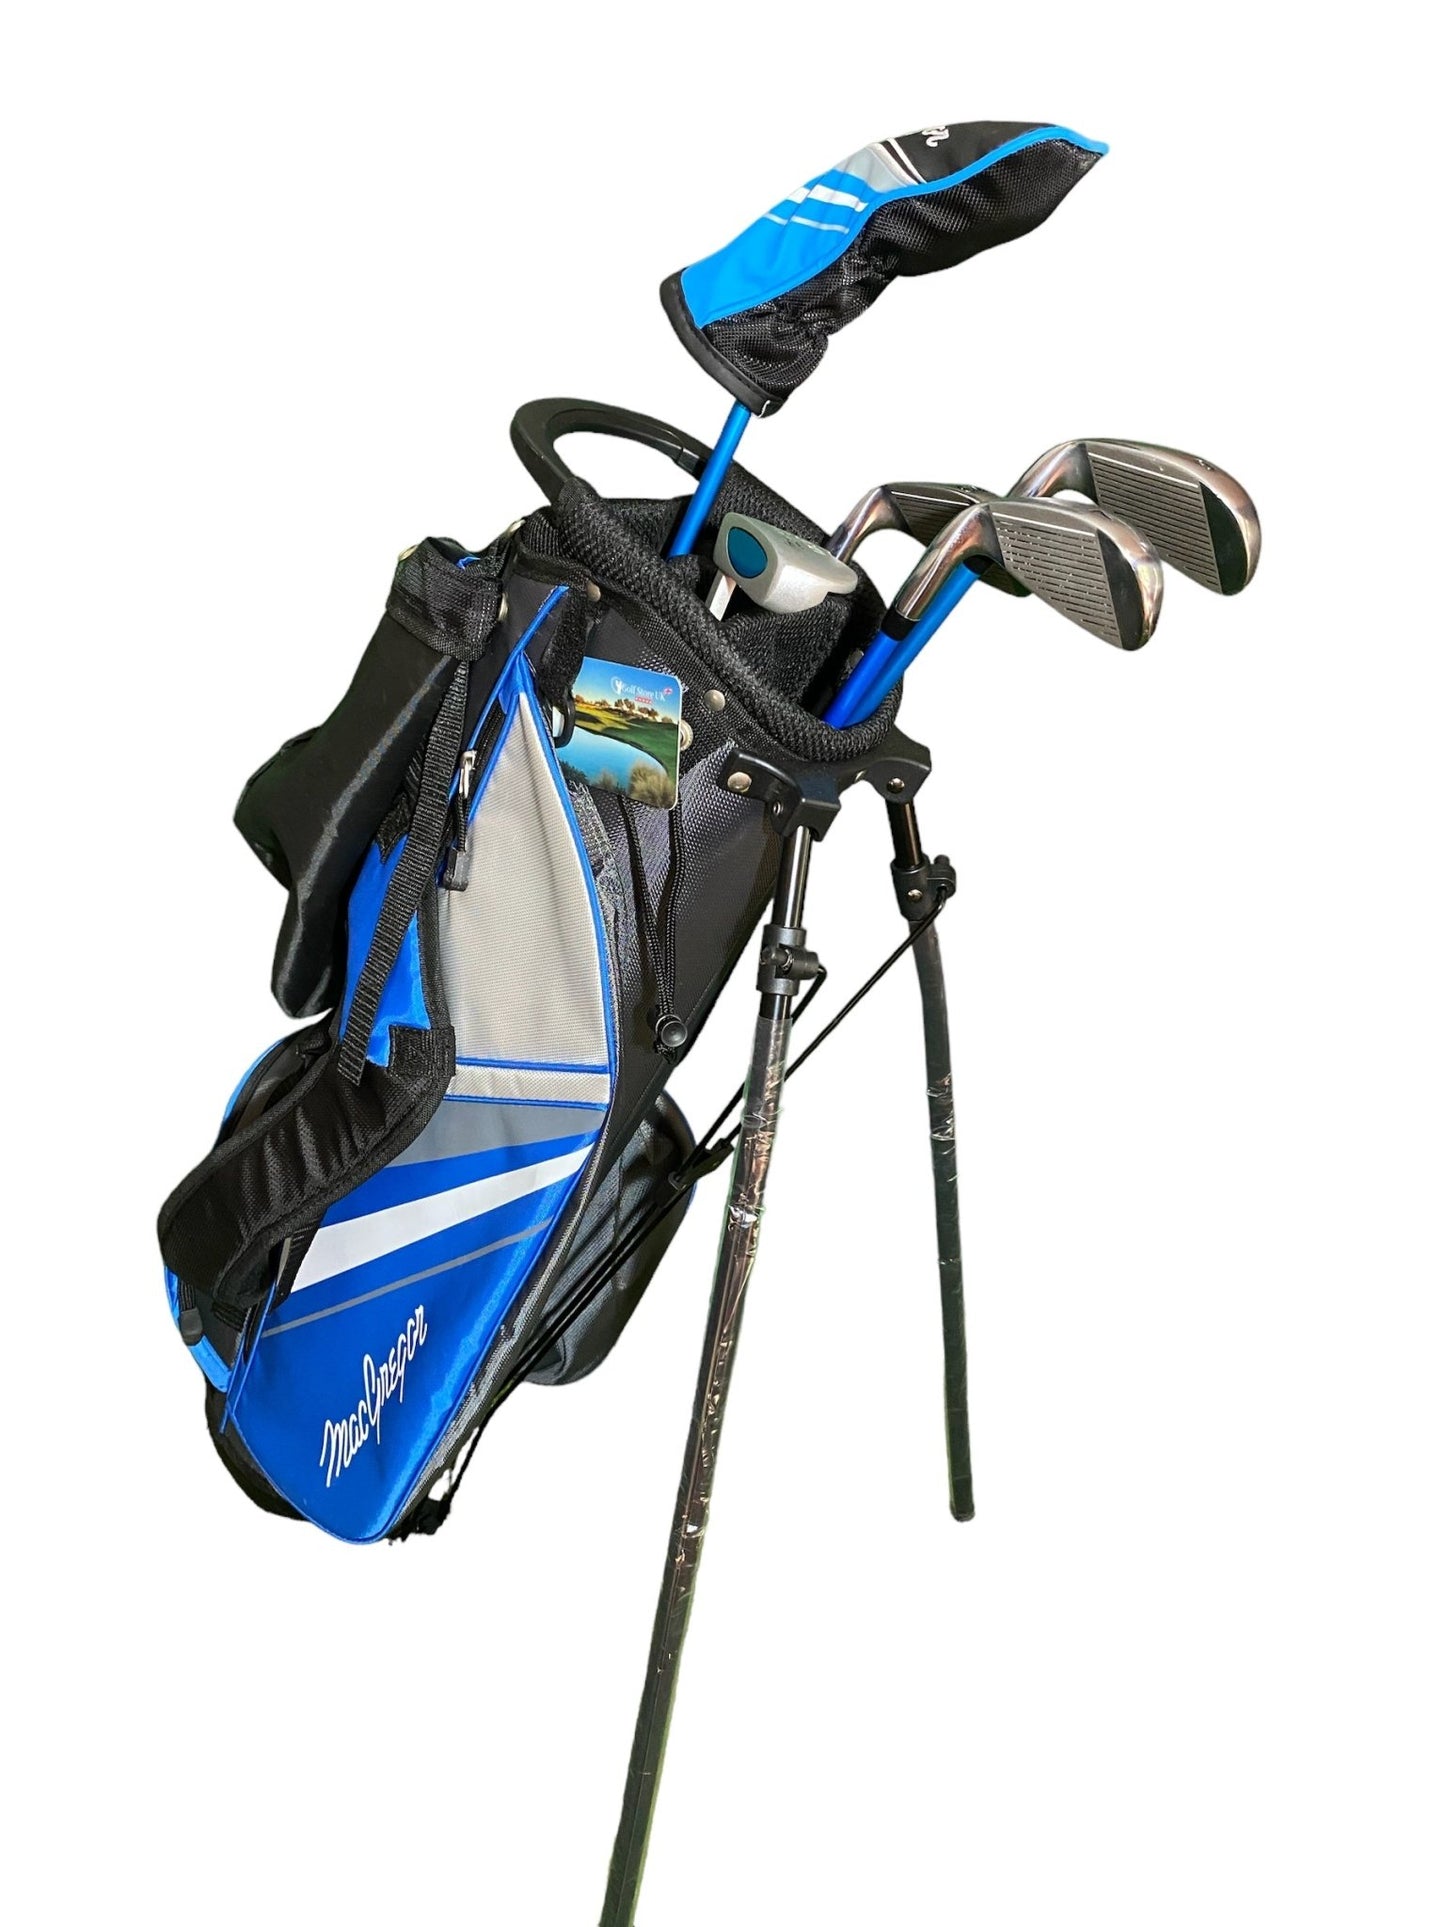 (Kids) MacGregor DCT Bag and Club Set, Stunning Set - Golf Store UK